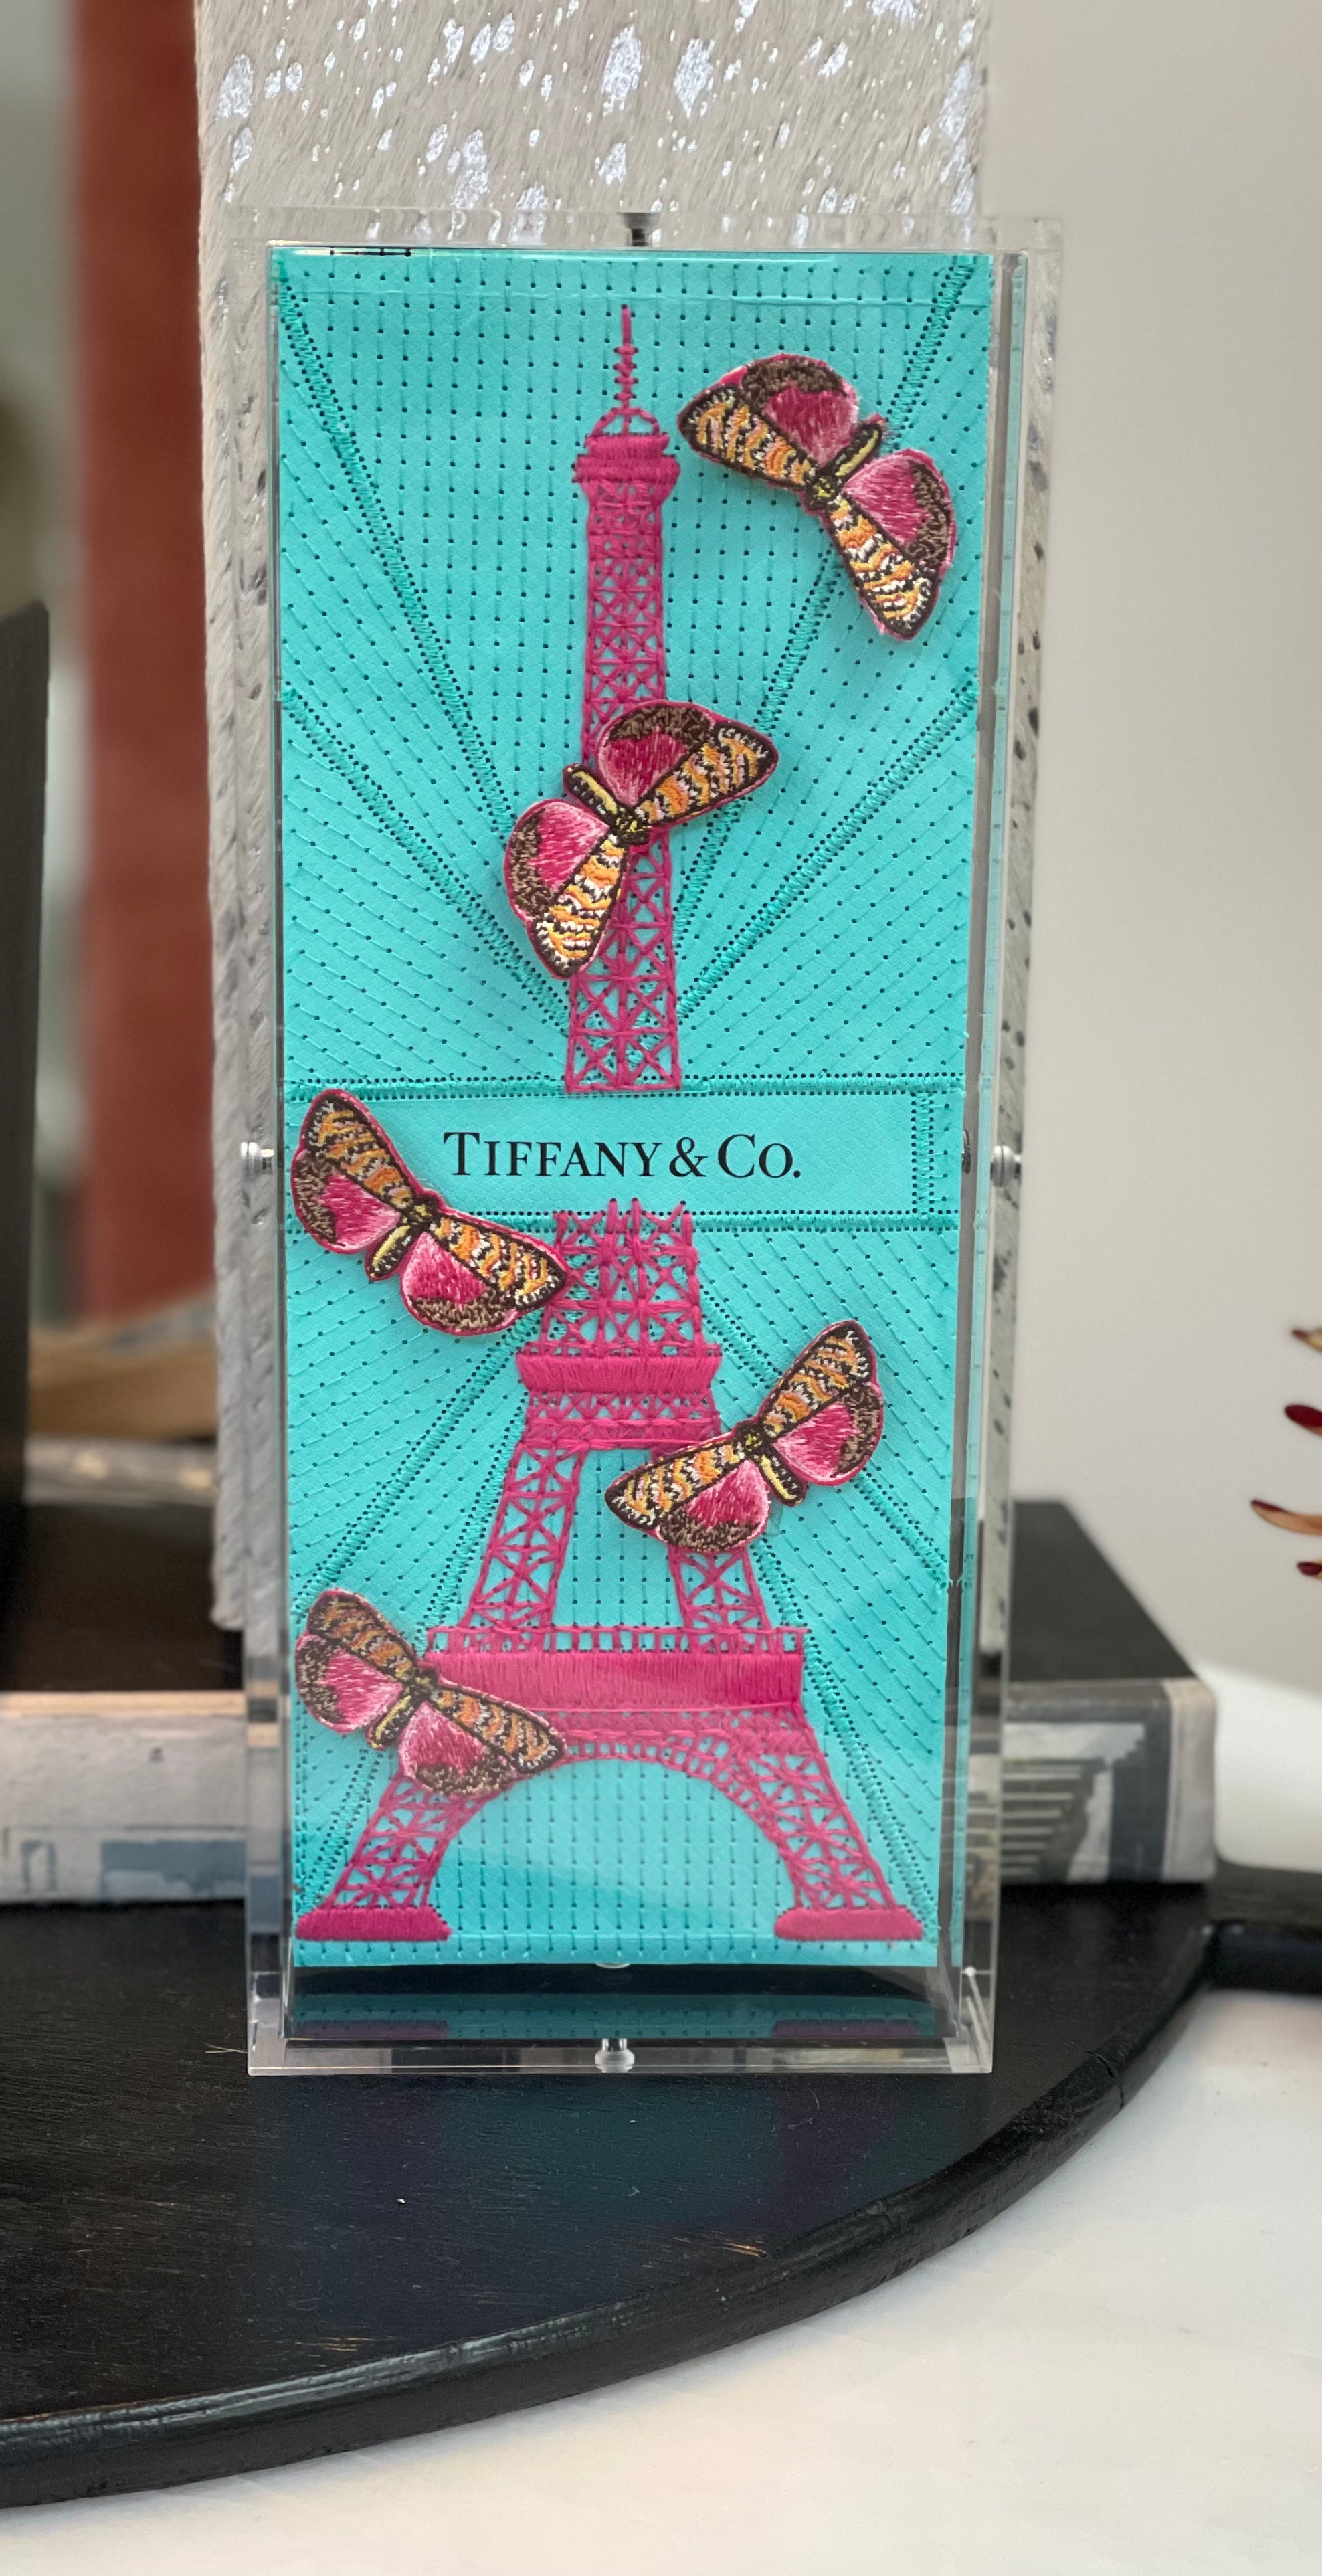 Petite Eiffel Tower in Tiffany & Co.